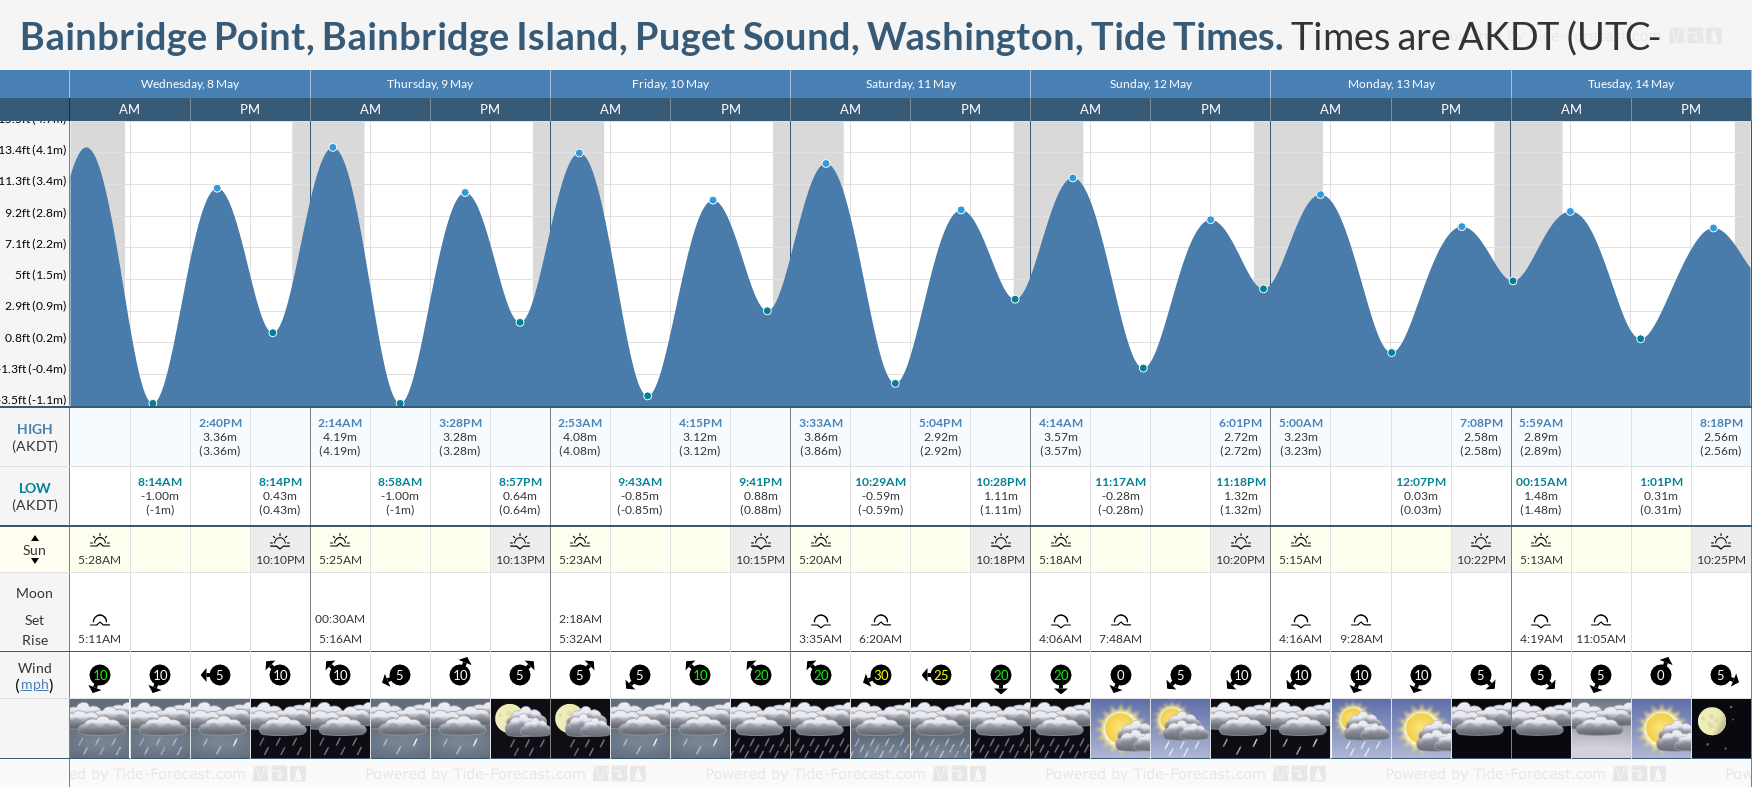 Bainbridge Point, Bainbridge Island, Puget Sound, Washington Tide Chart including high and low tide tide times for the next 7 days